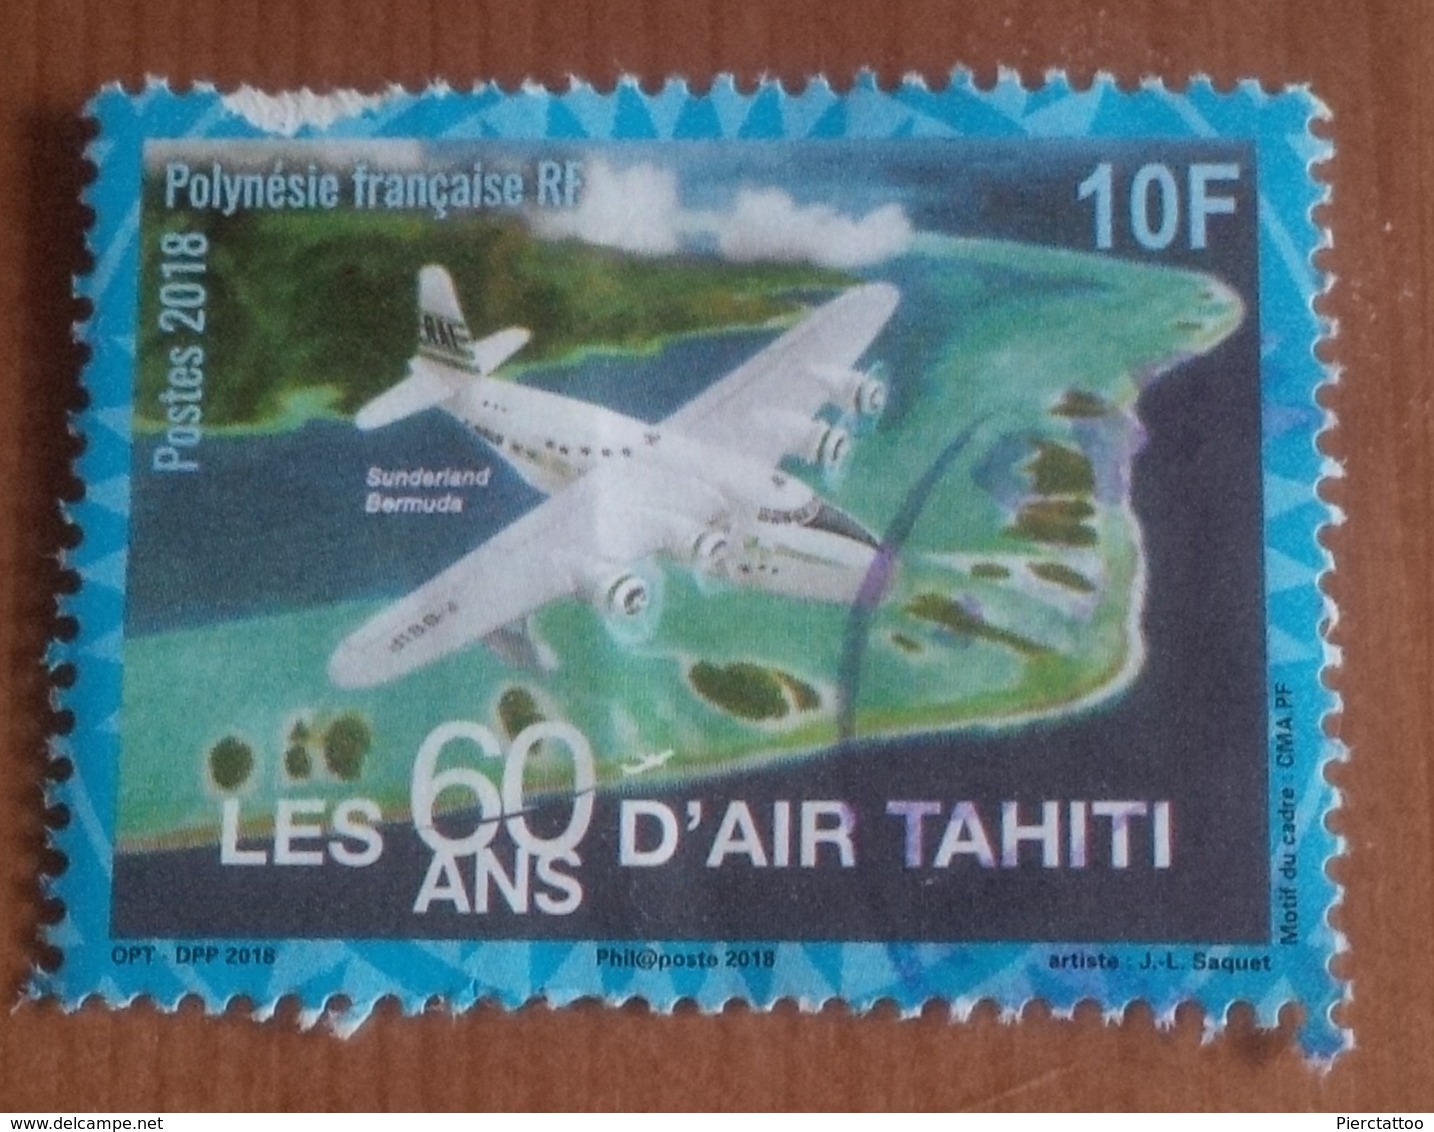 Les 60 Ans D'air Tahiti (Avion) - Polynésie Française - 2018 - YT 1176 - Usati